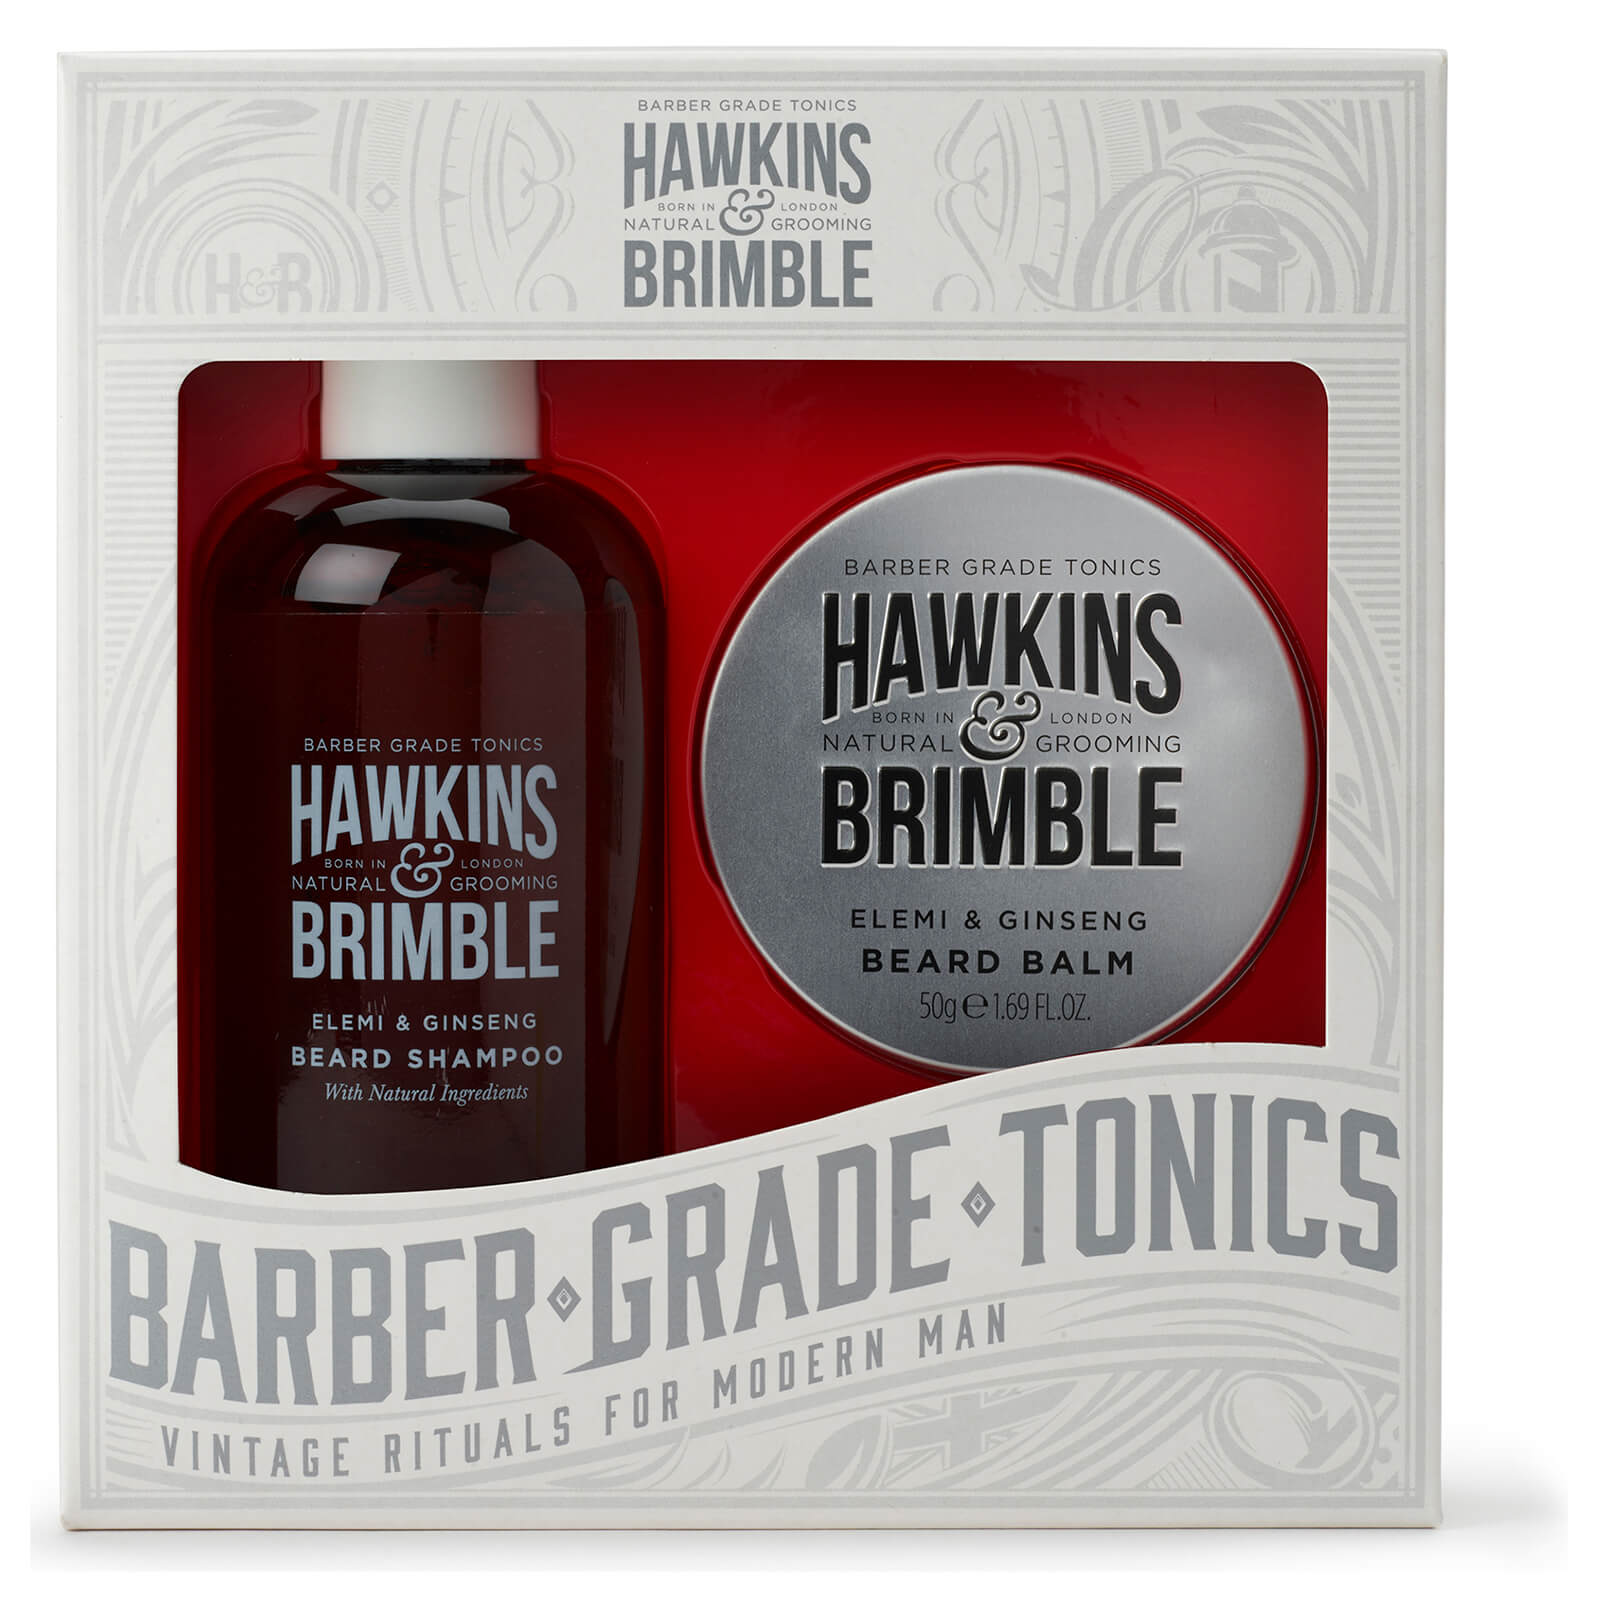 Hawkins & Brimble Beard Gift Set (Worth £22.90)